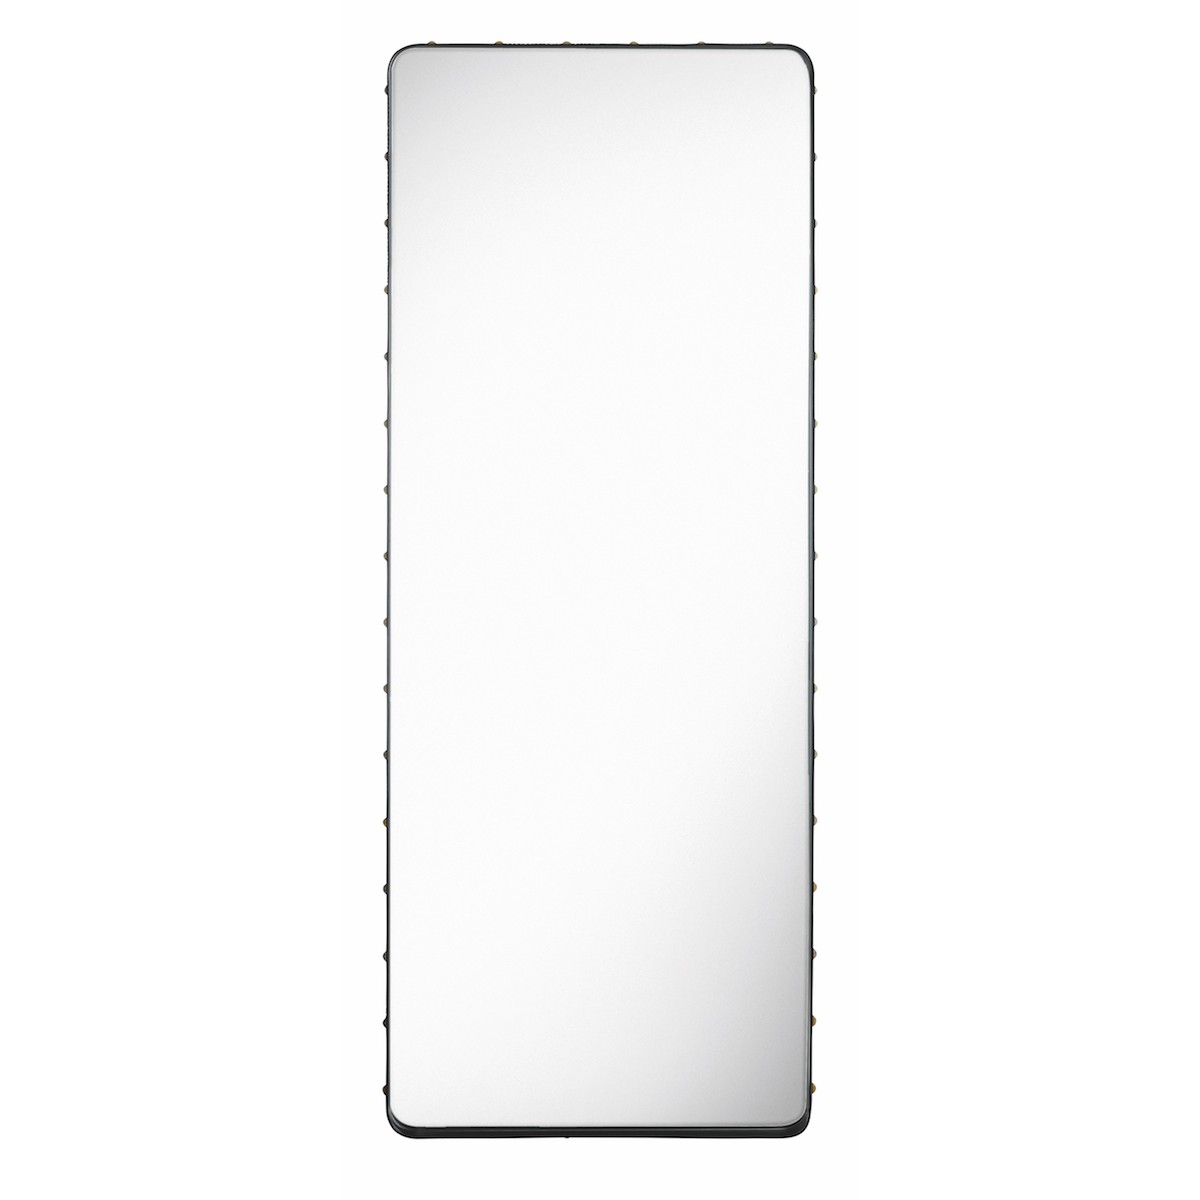 180x70cm - black leather - Adnet rectangular mirror